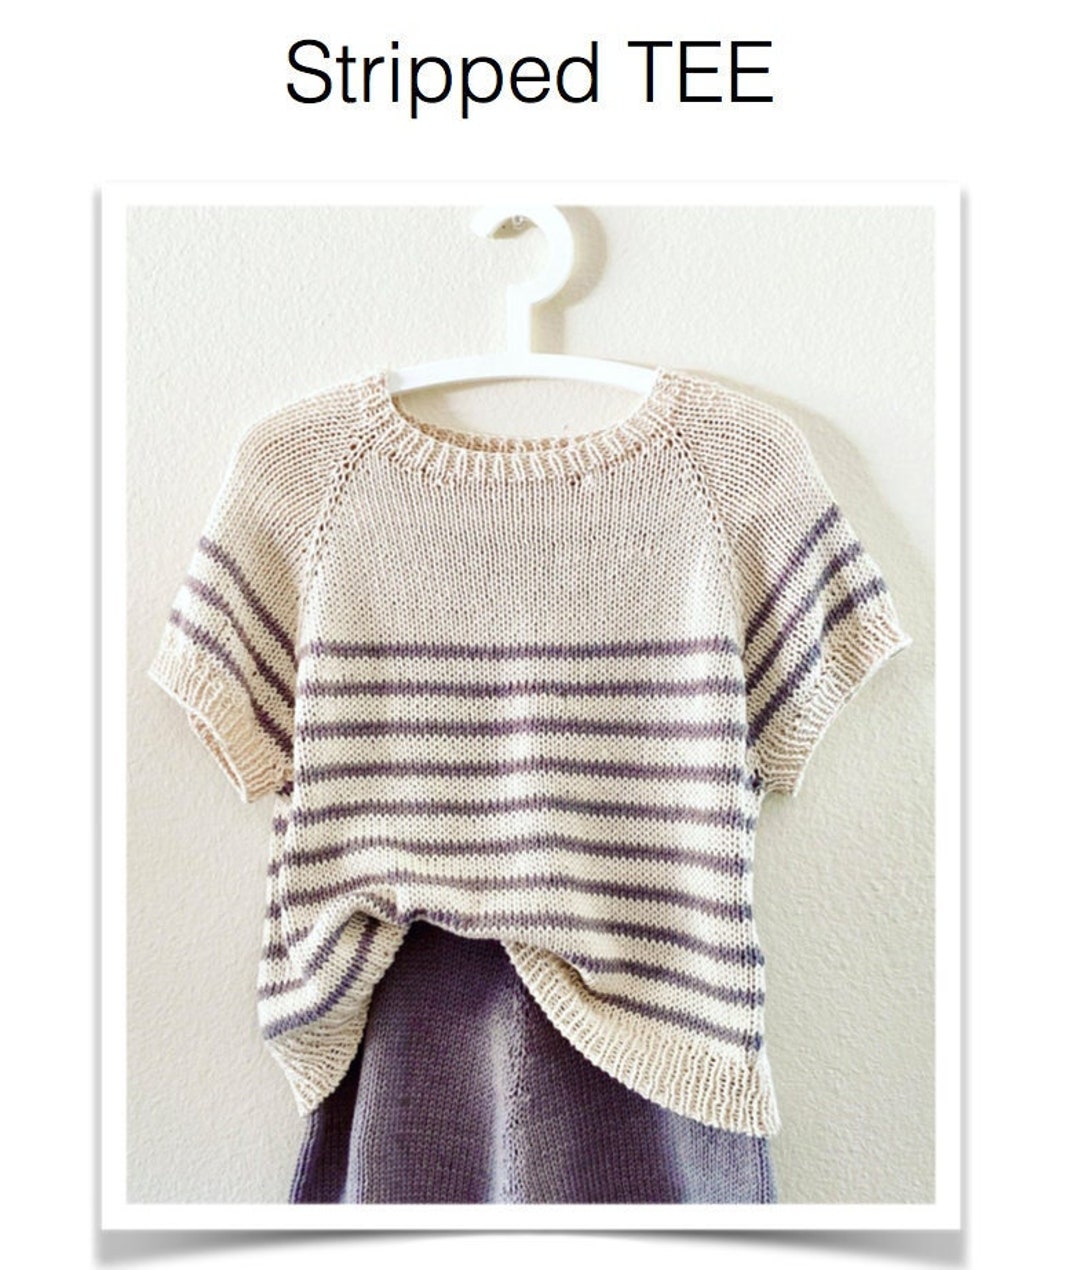 Stripped TEE Knit Pattern